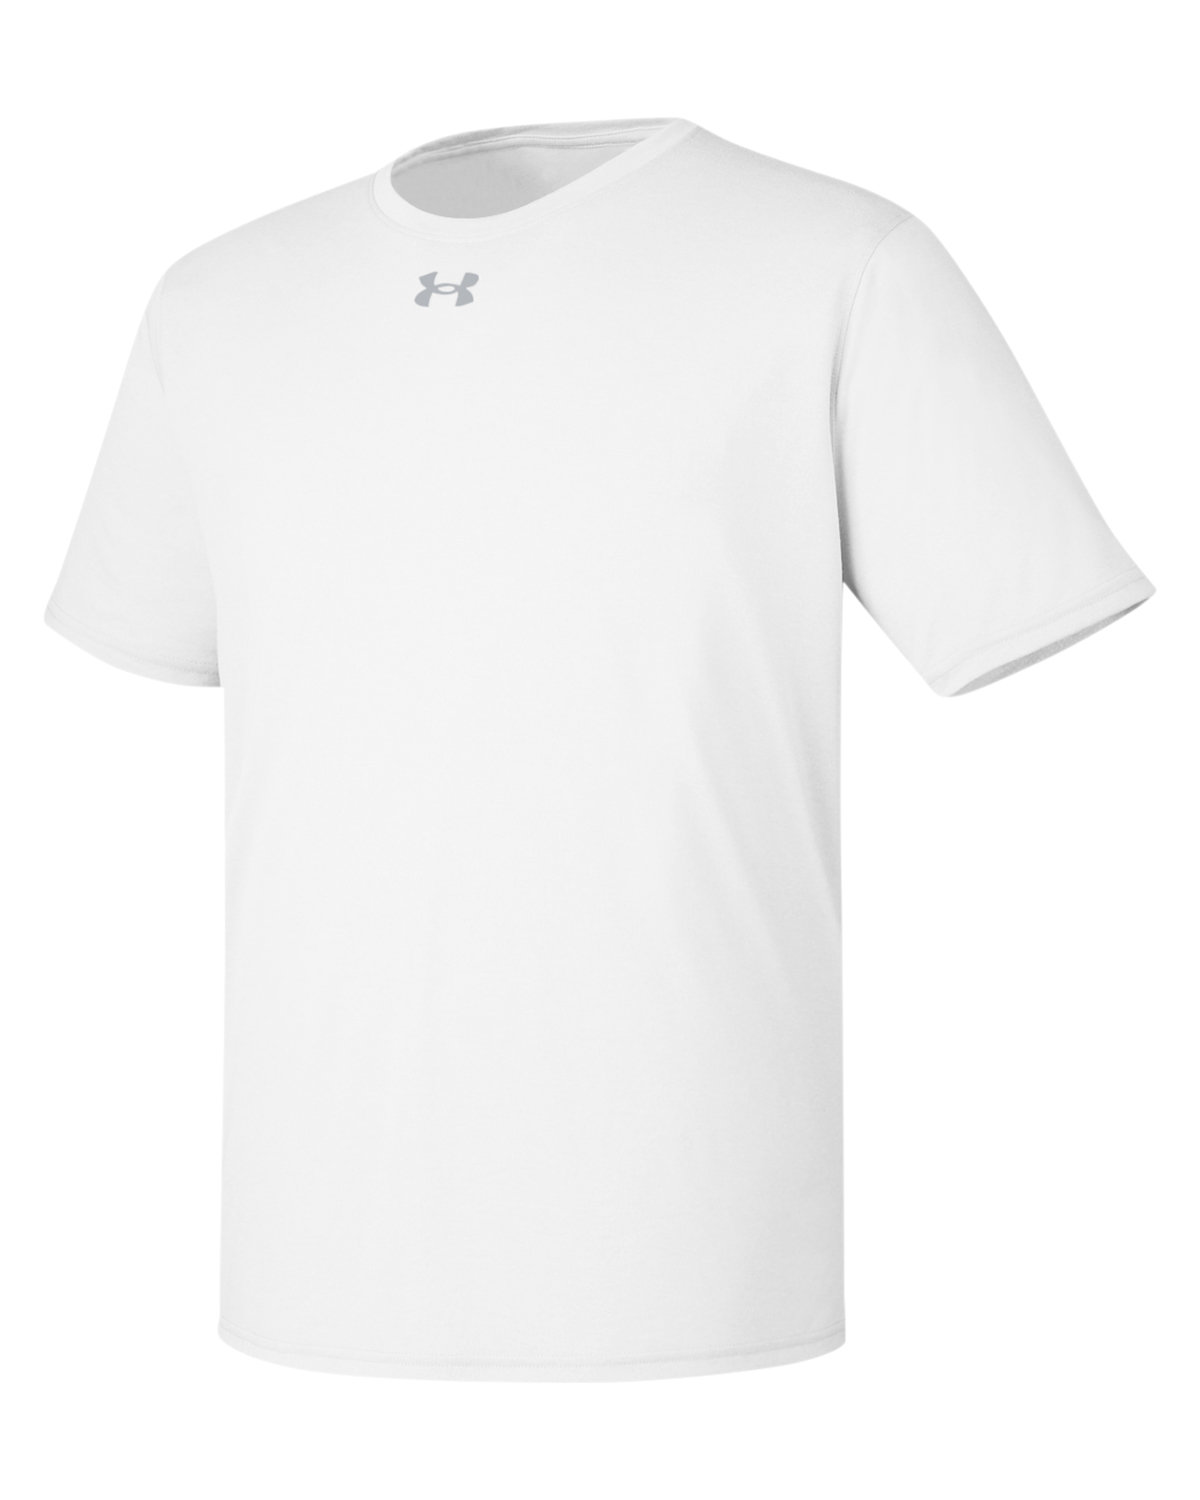 Under Armour Men's Team Tech T-Shirt | Generic Site - Priced